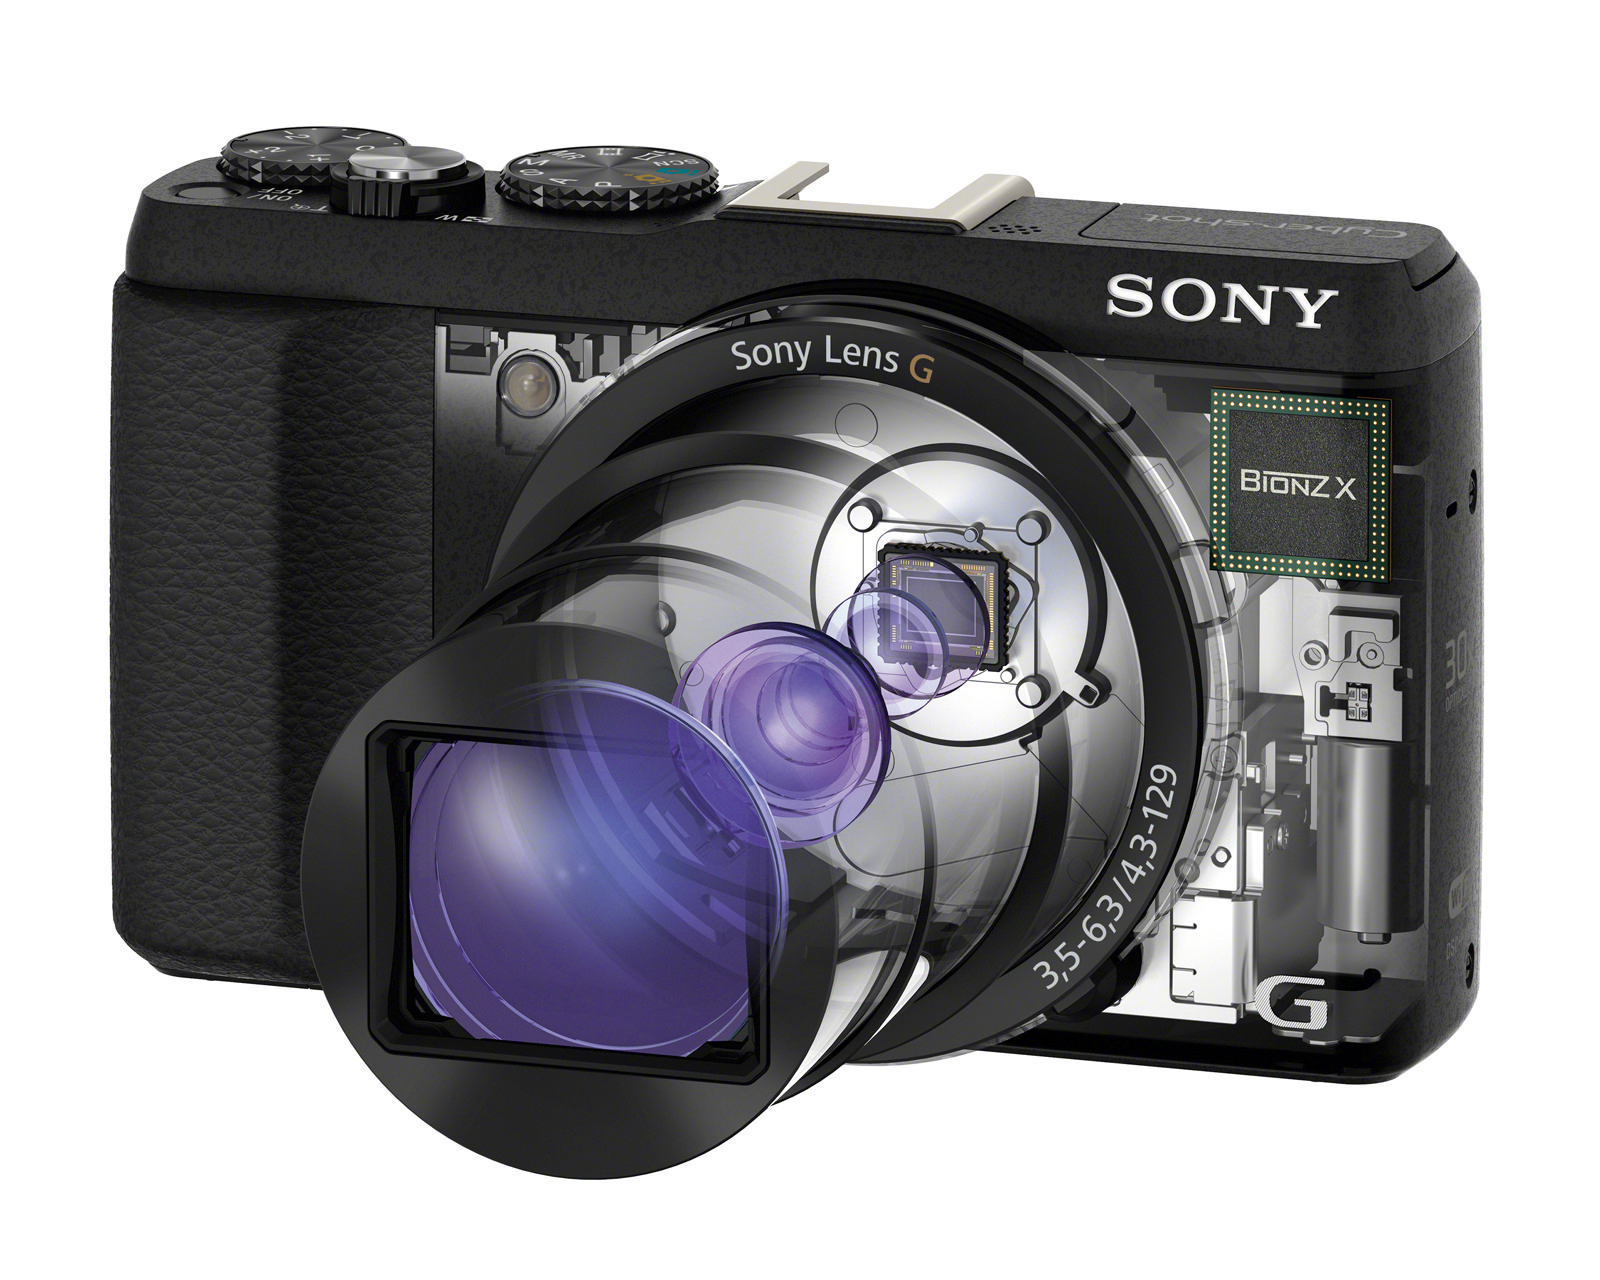 30x Schwarz, Zoom, SONY Fine, Digitalkamera opt. NFC Cyber-shot , WLAN DSC-HX60 Xtra TFT-LCD,